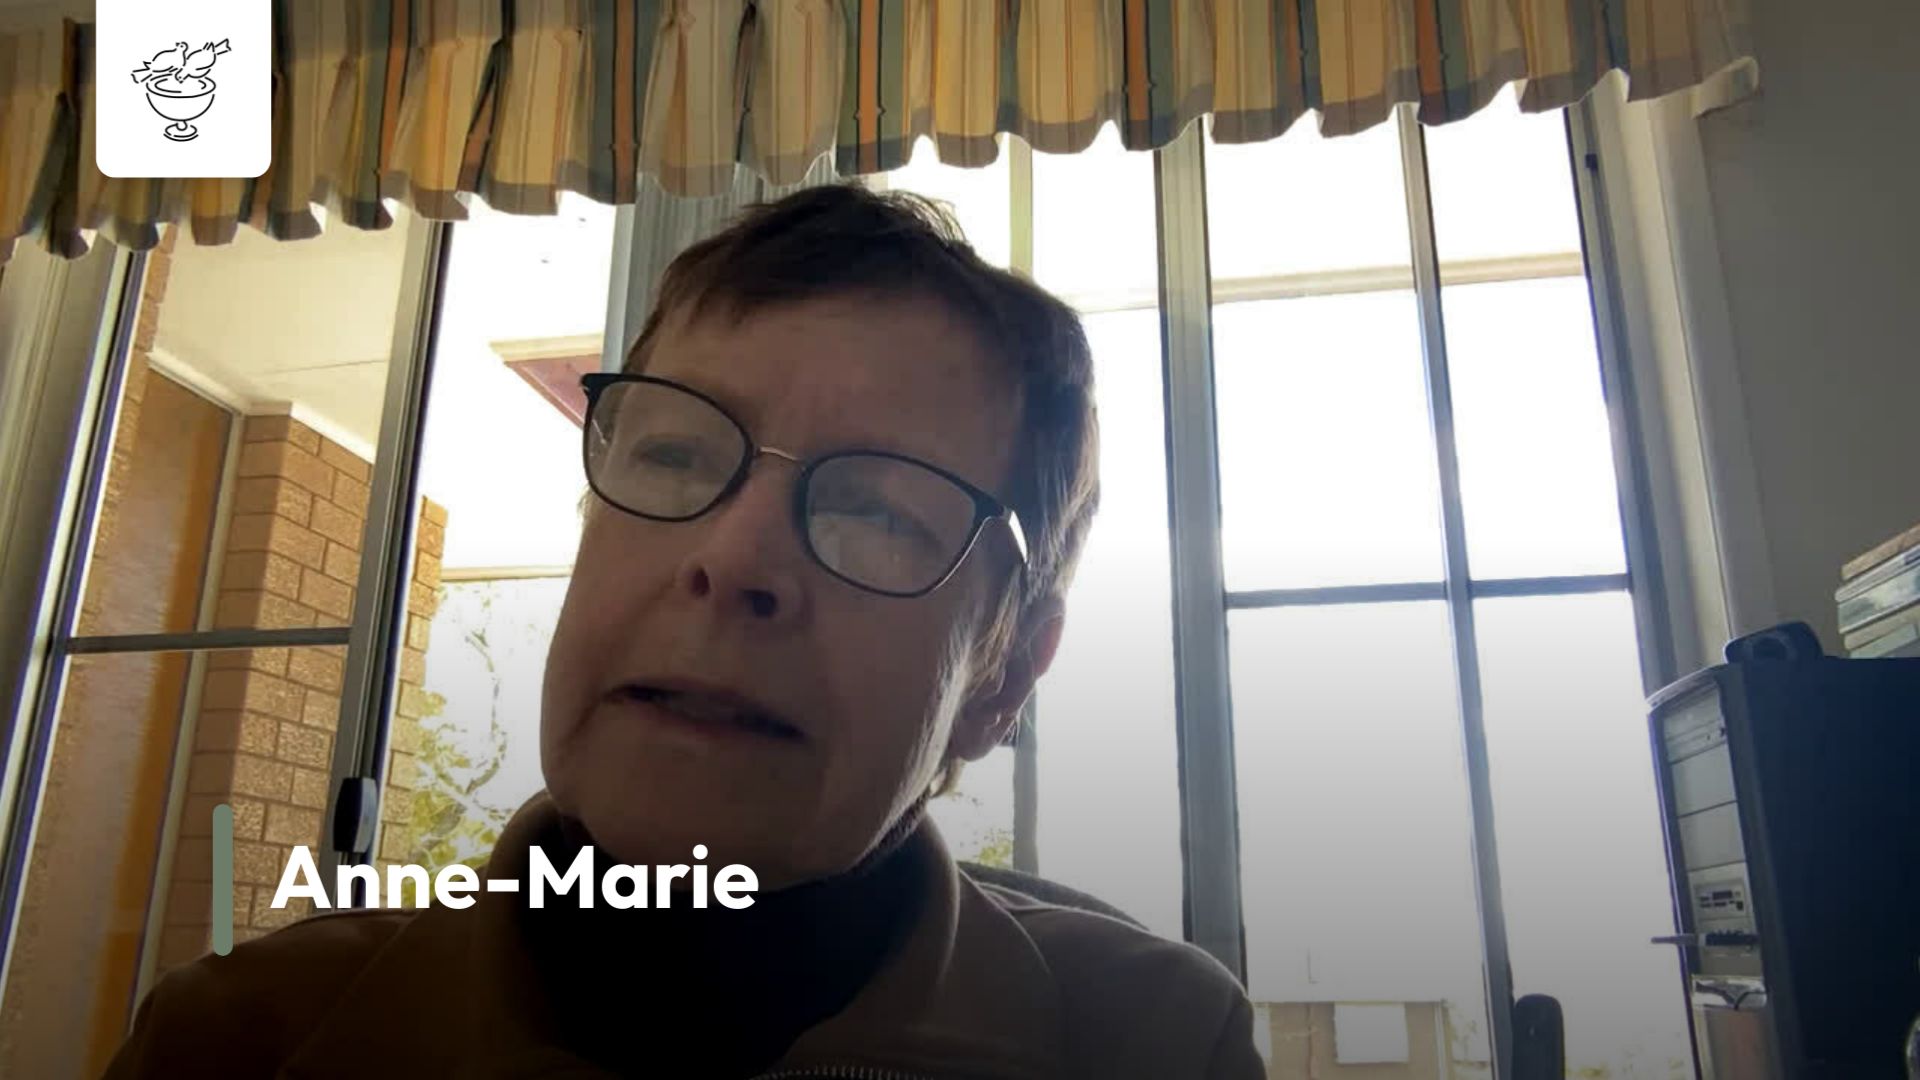 Anne-Marie, meditator from Australia